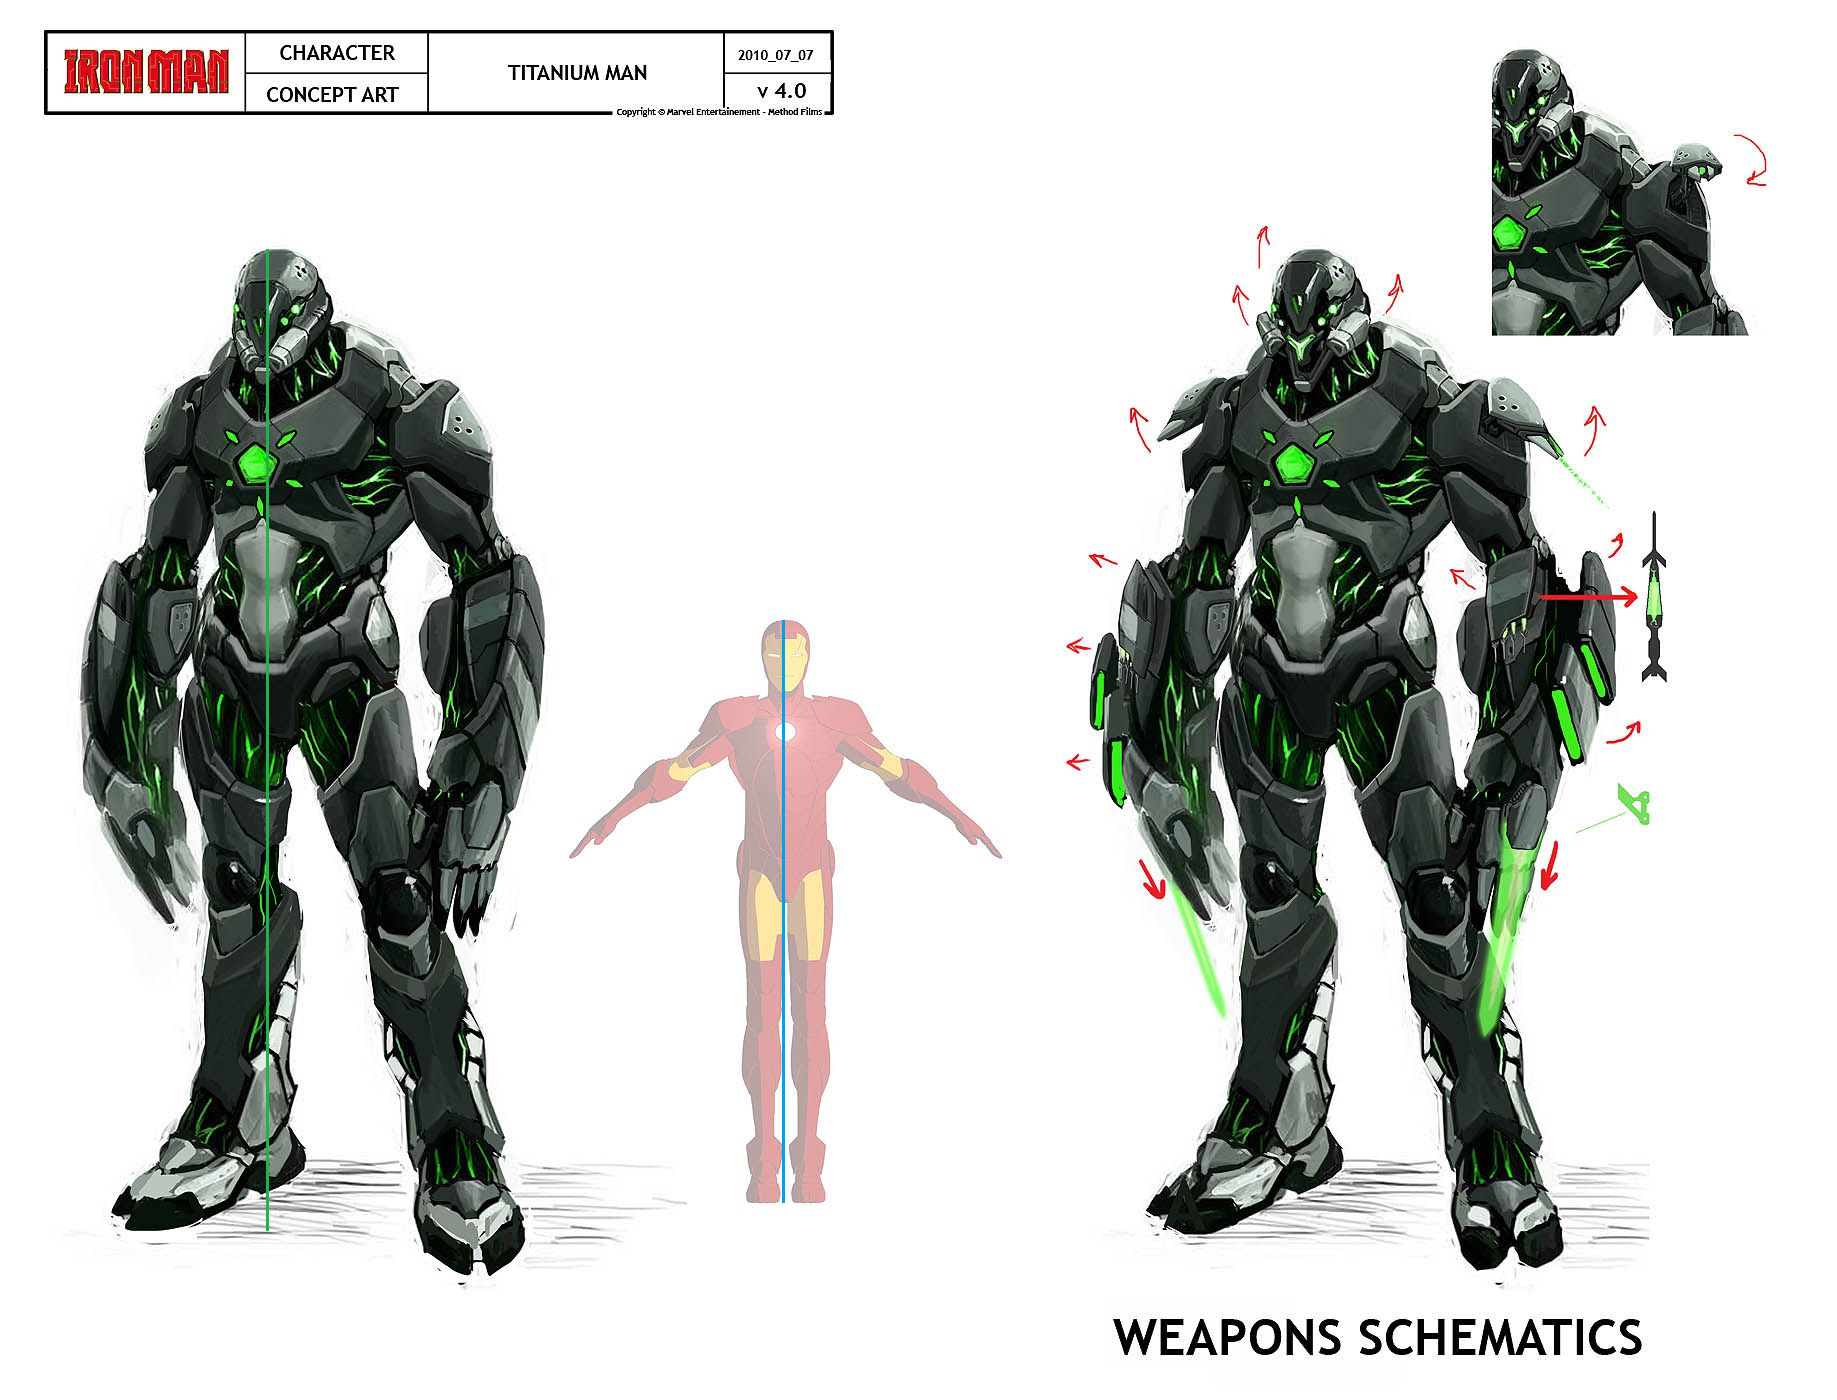 iron man armored adventures 2022